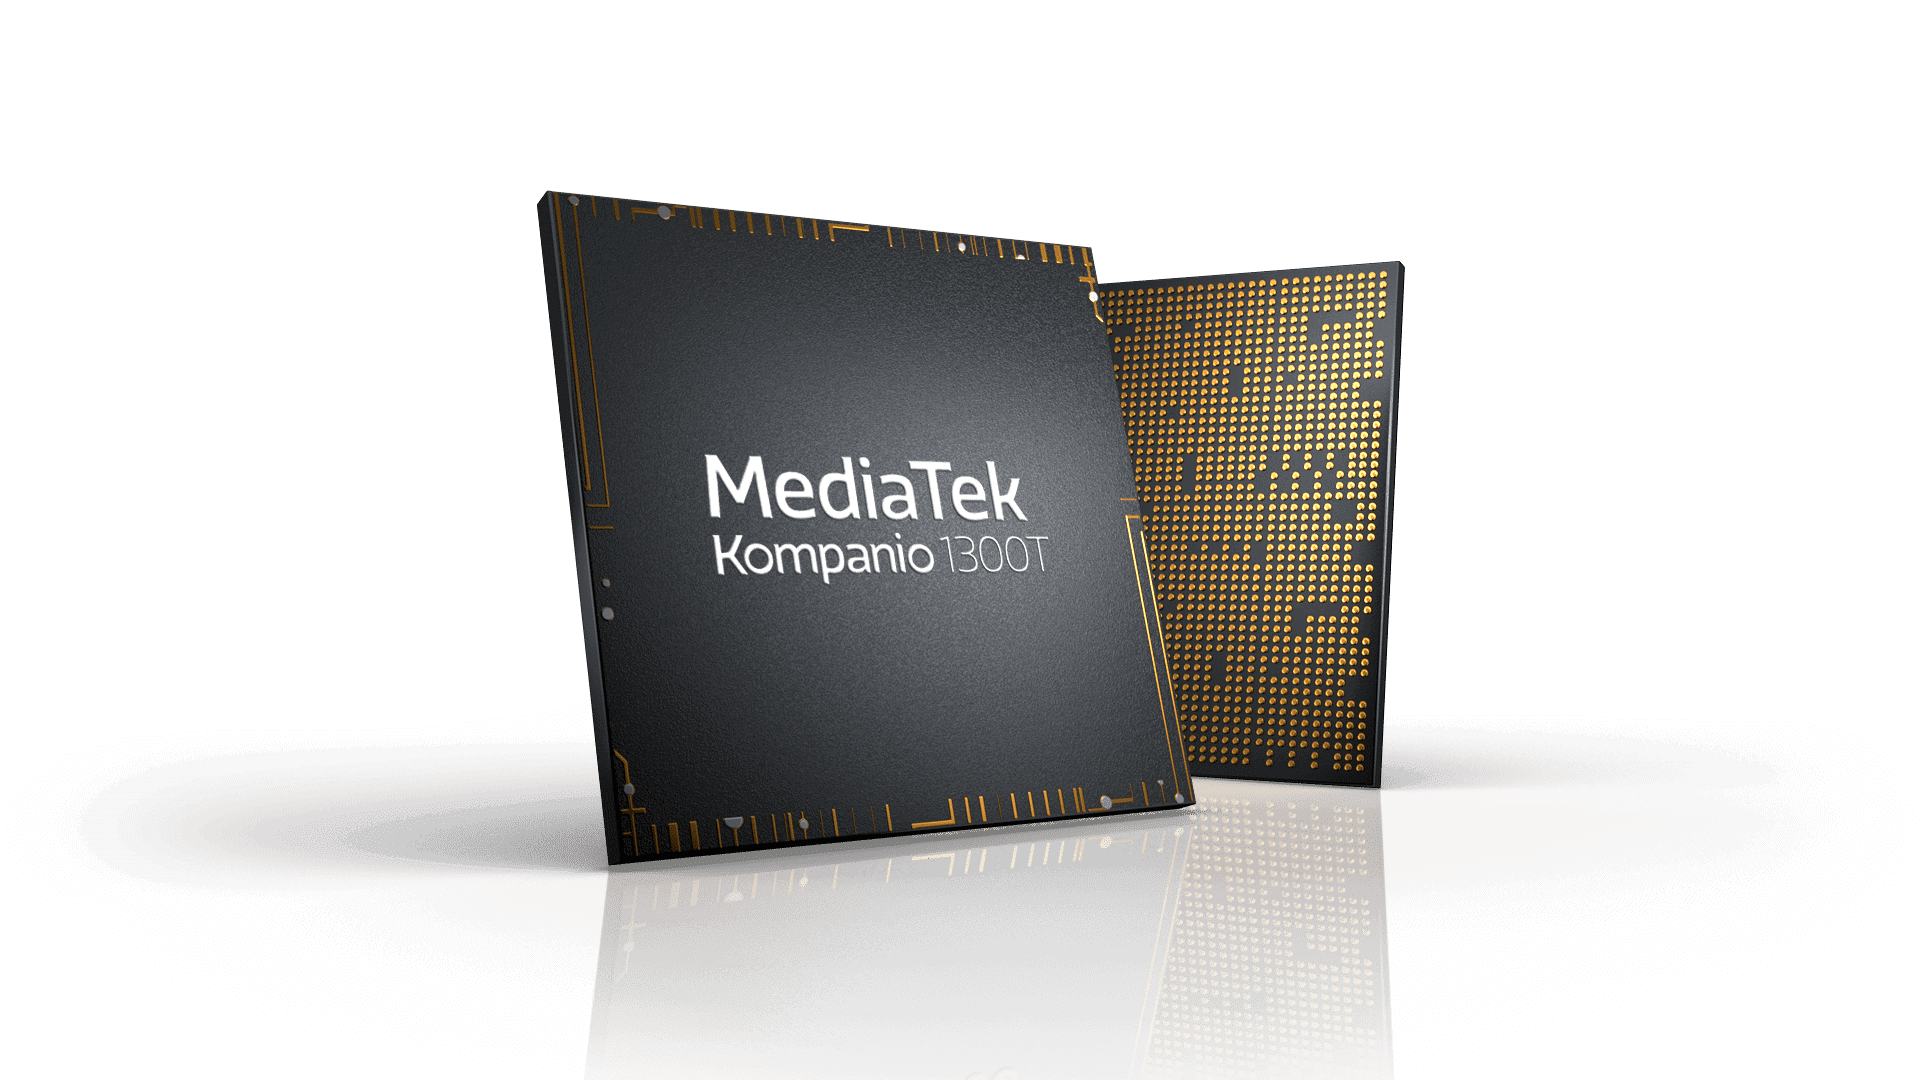 MediaTek เปิดตัวแพลตฟอร์ม Kompanio 1300T เพื่อยกระดับประสบการณ์การใช้คอมพิวเตอร์ระดับเรือธงในแท็บเล็ต 3